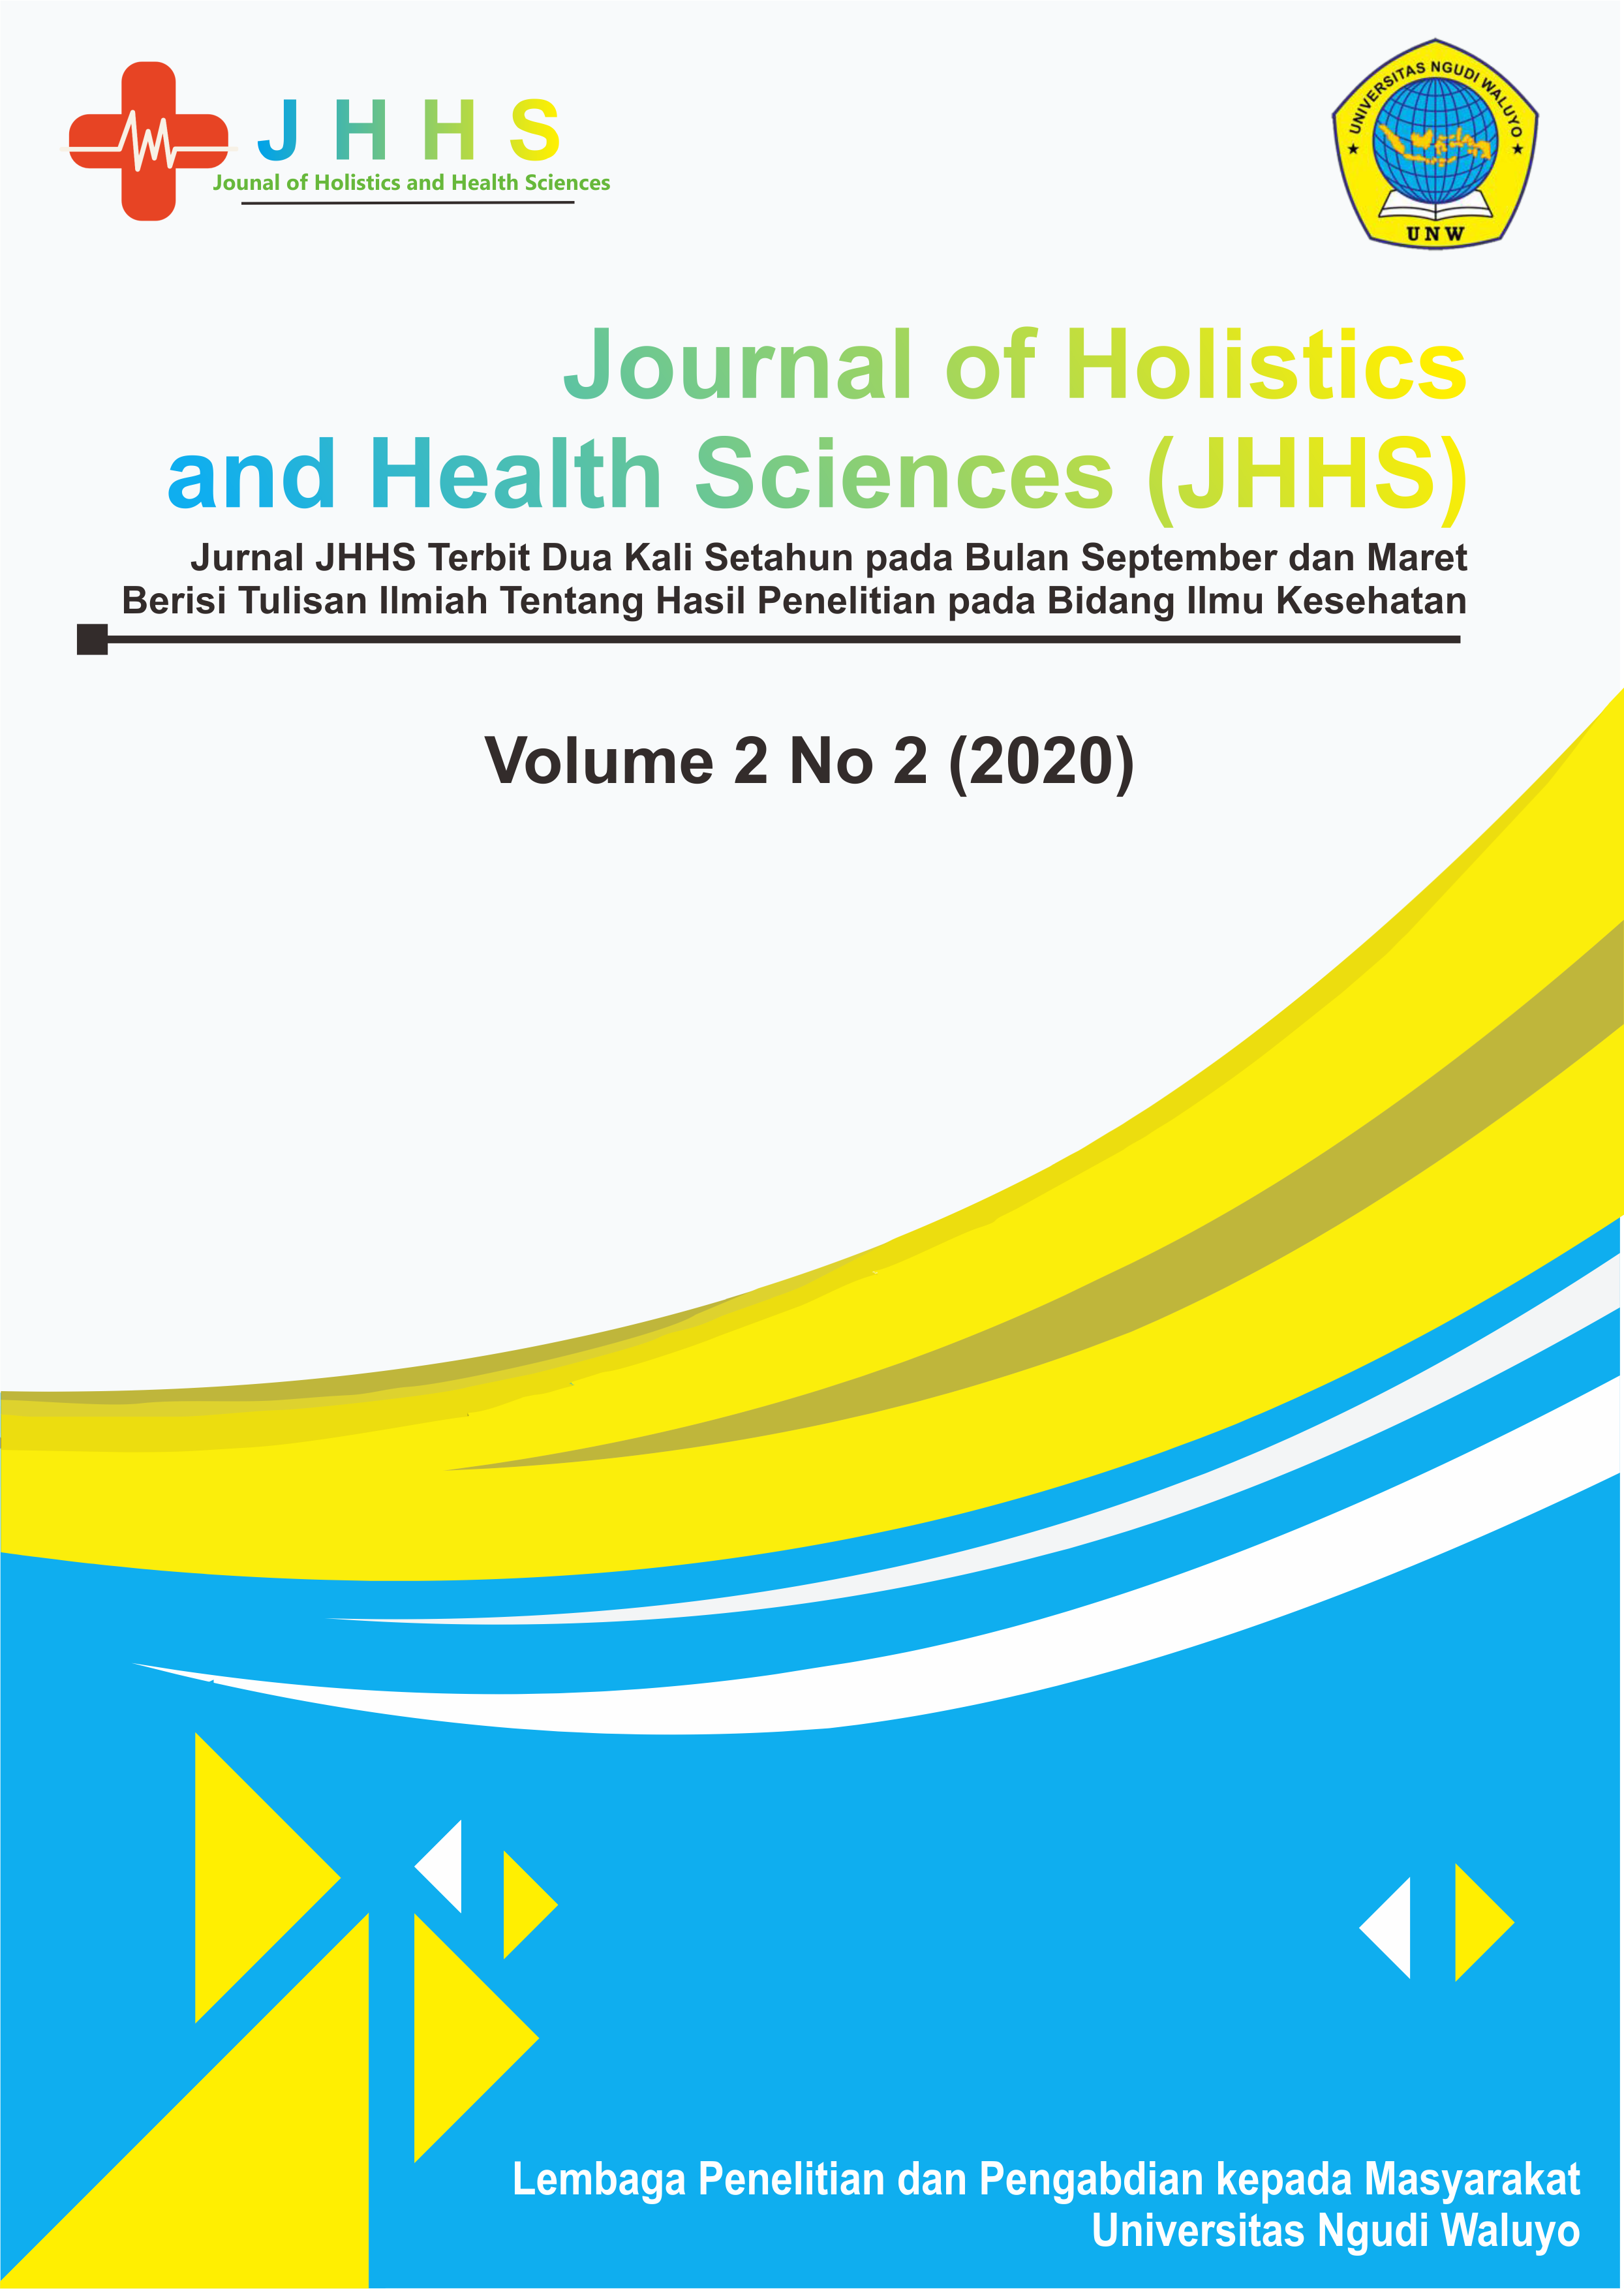 					View Vol. 2 No. 2 (2020): Journal of Holistics and Health Sciences (JHHS), September
				